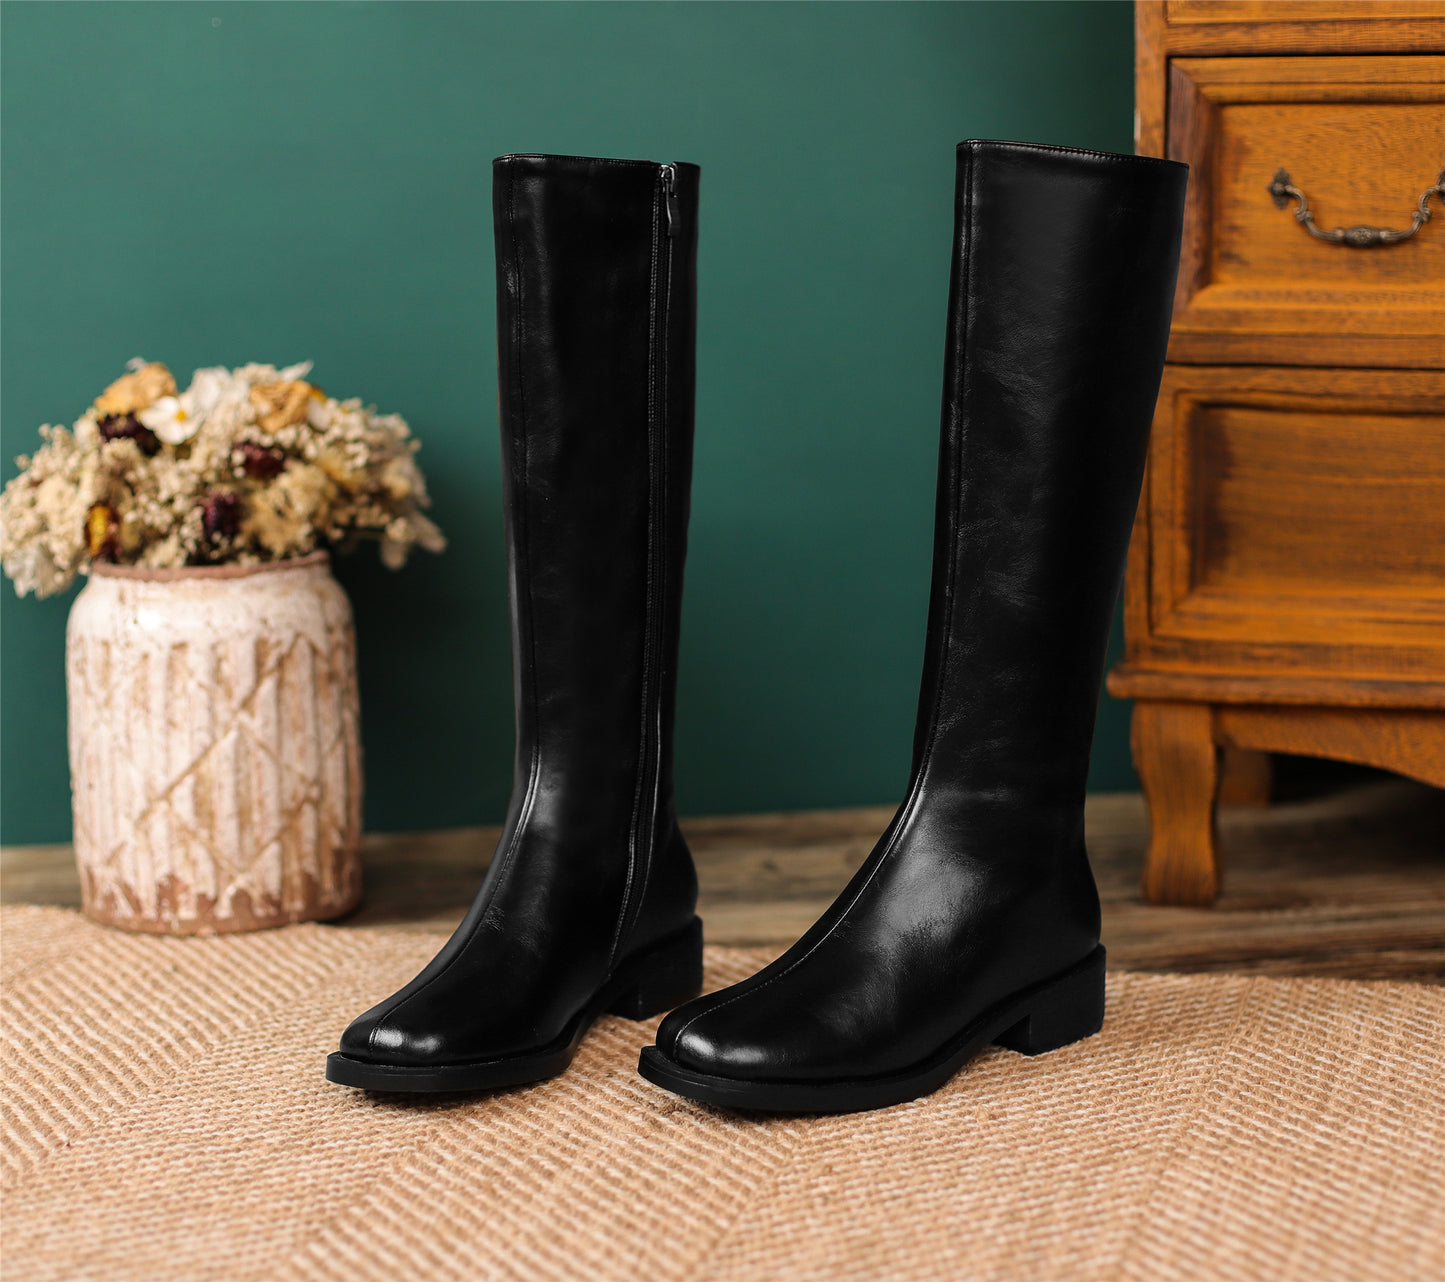 TinaCus Women's Handmade Genuine Leather Square Toe Side Zip Up Block Heel Knee High Boots